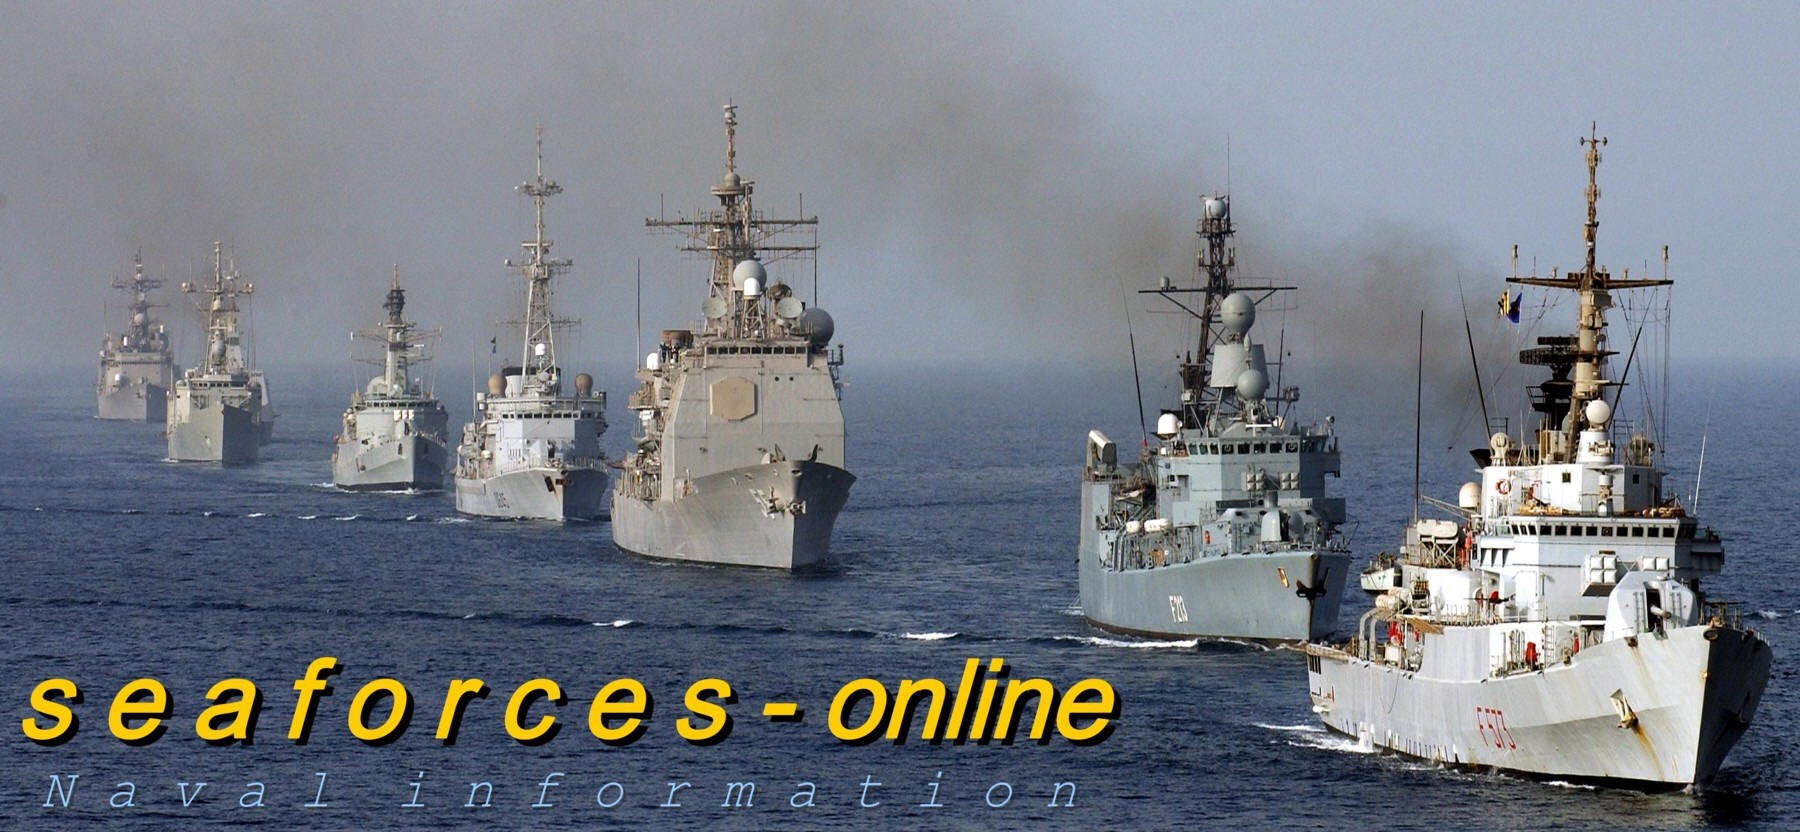 Seaforces Online - Naval Information